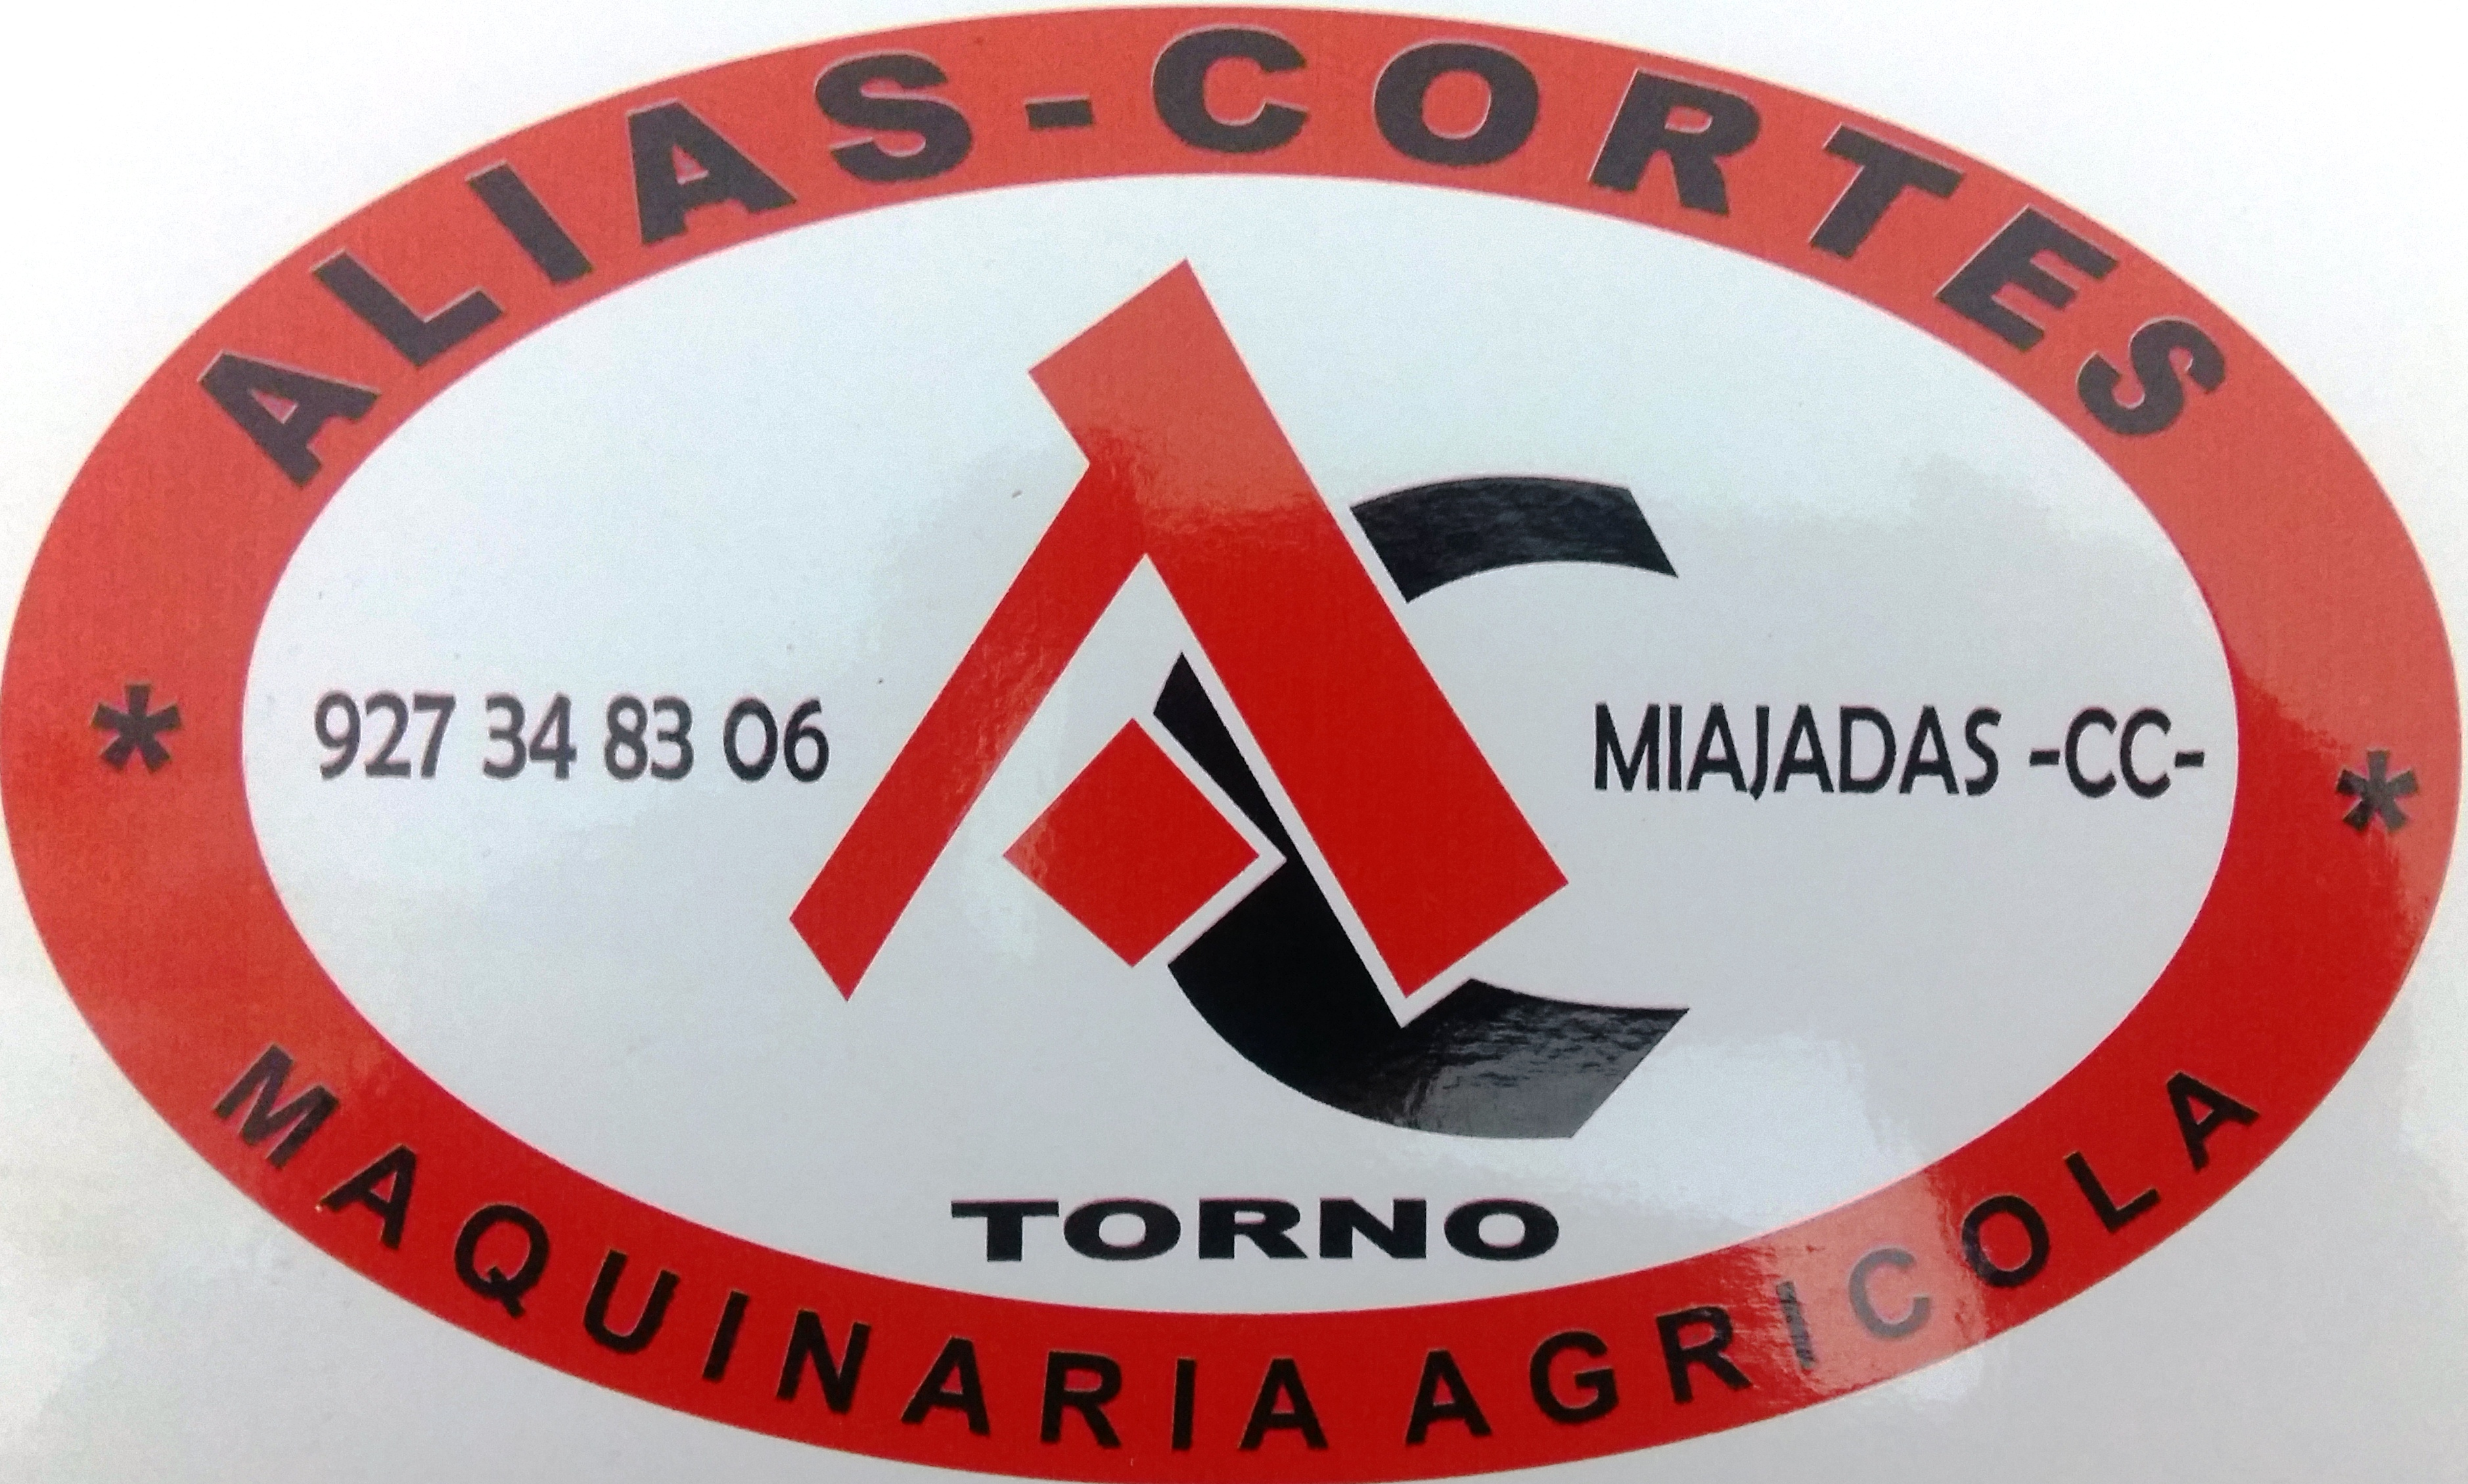 Alías Cortés Maquinaria Agricola